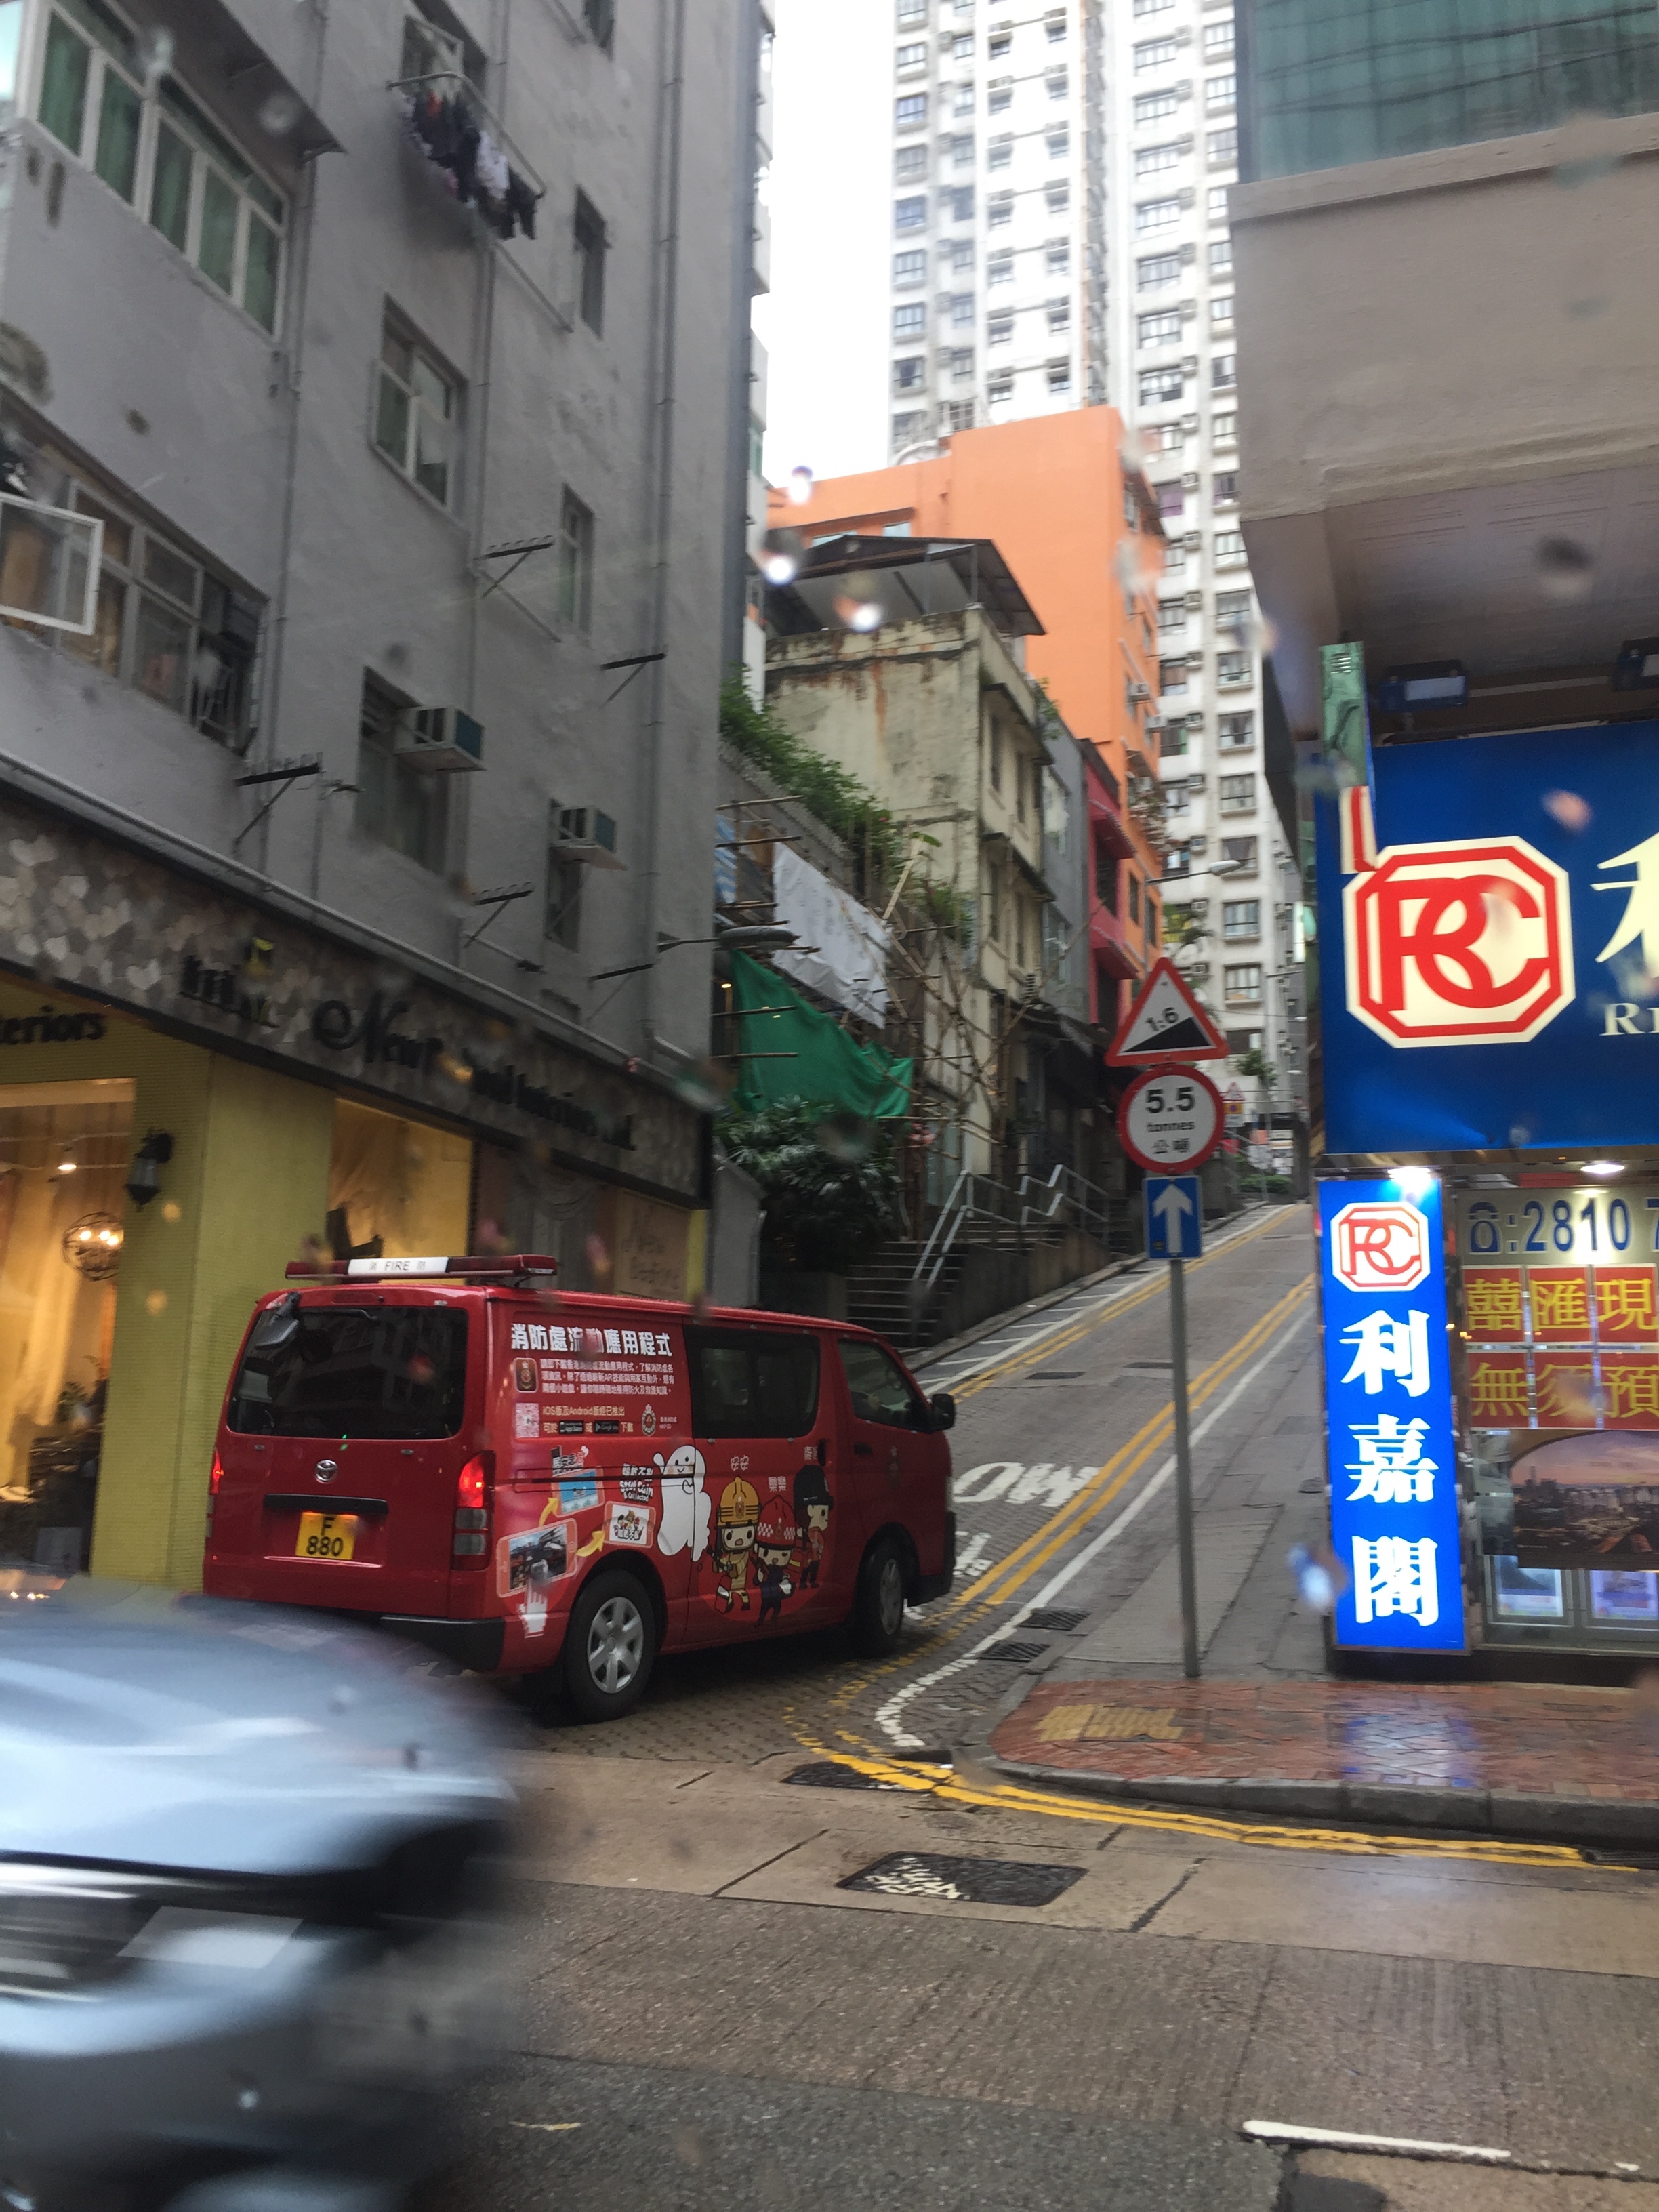 Streets of Hong Kong via The Potted Boxwood